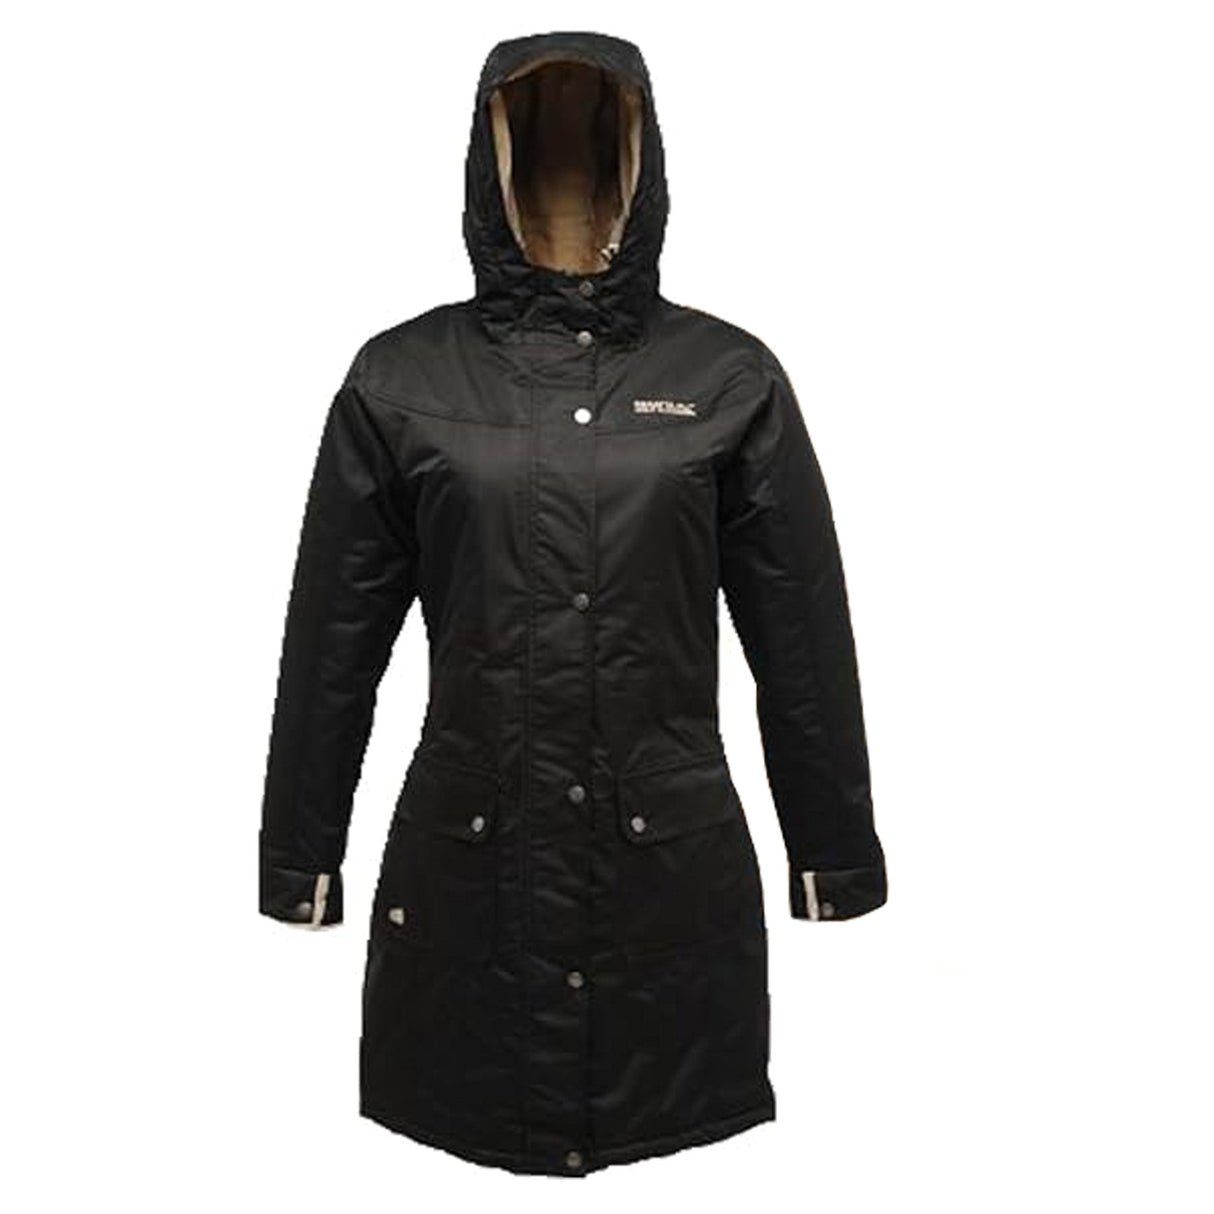 Regatta Womens Waterproof Jackets NIGHTSKY - Size 30 - Premium clothing from Regatta - Just $54.99! Shop now at Warwickshire Clothing